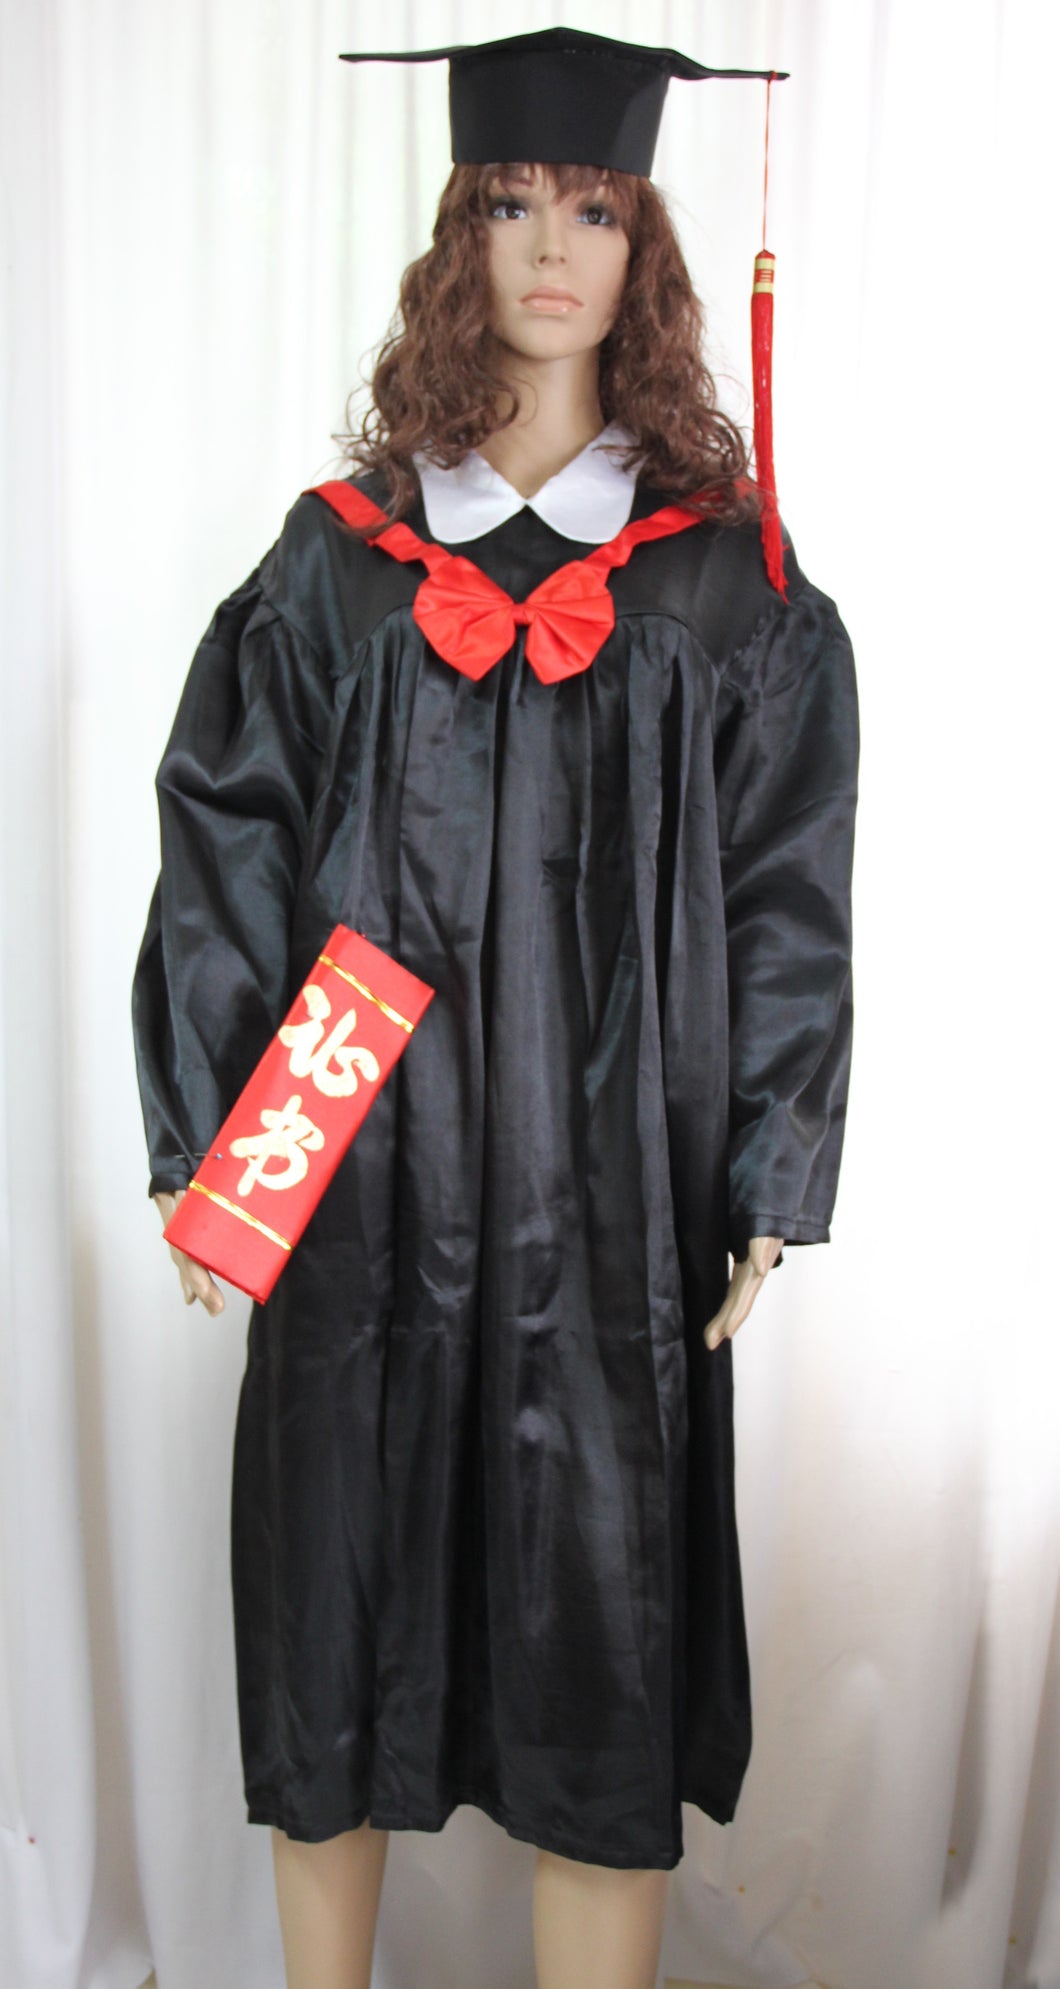 The Graduate Costume